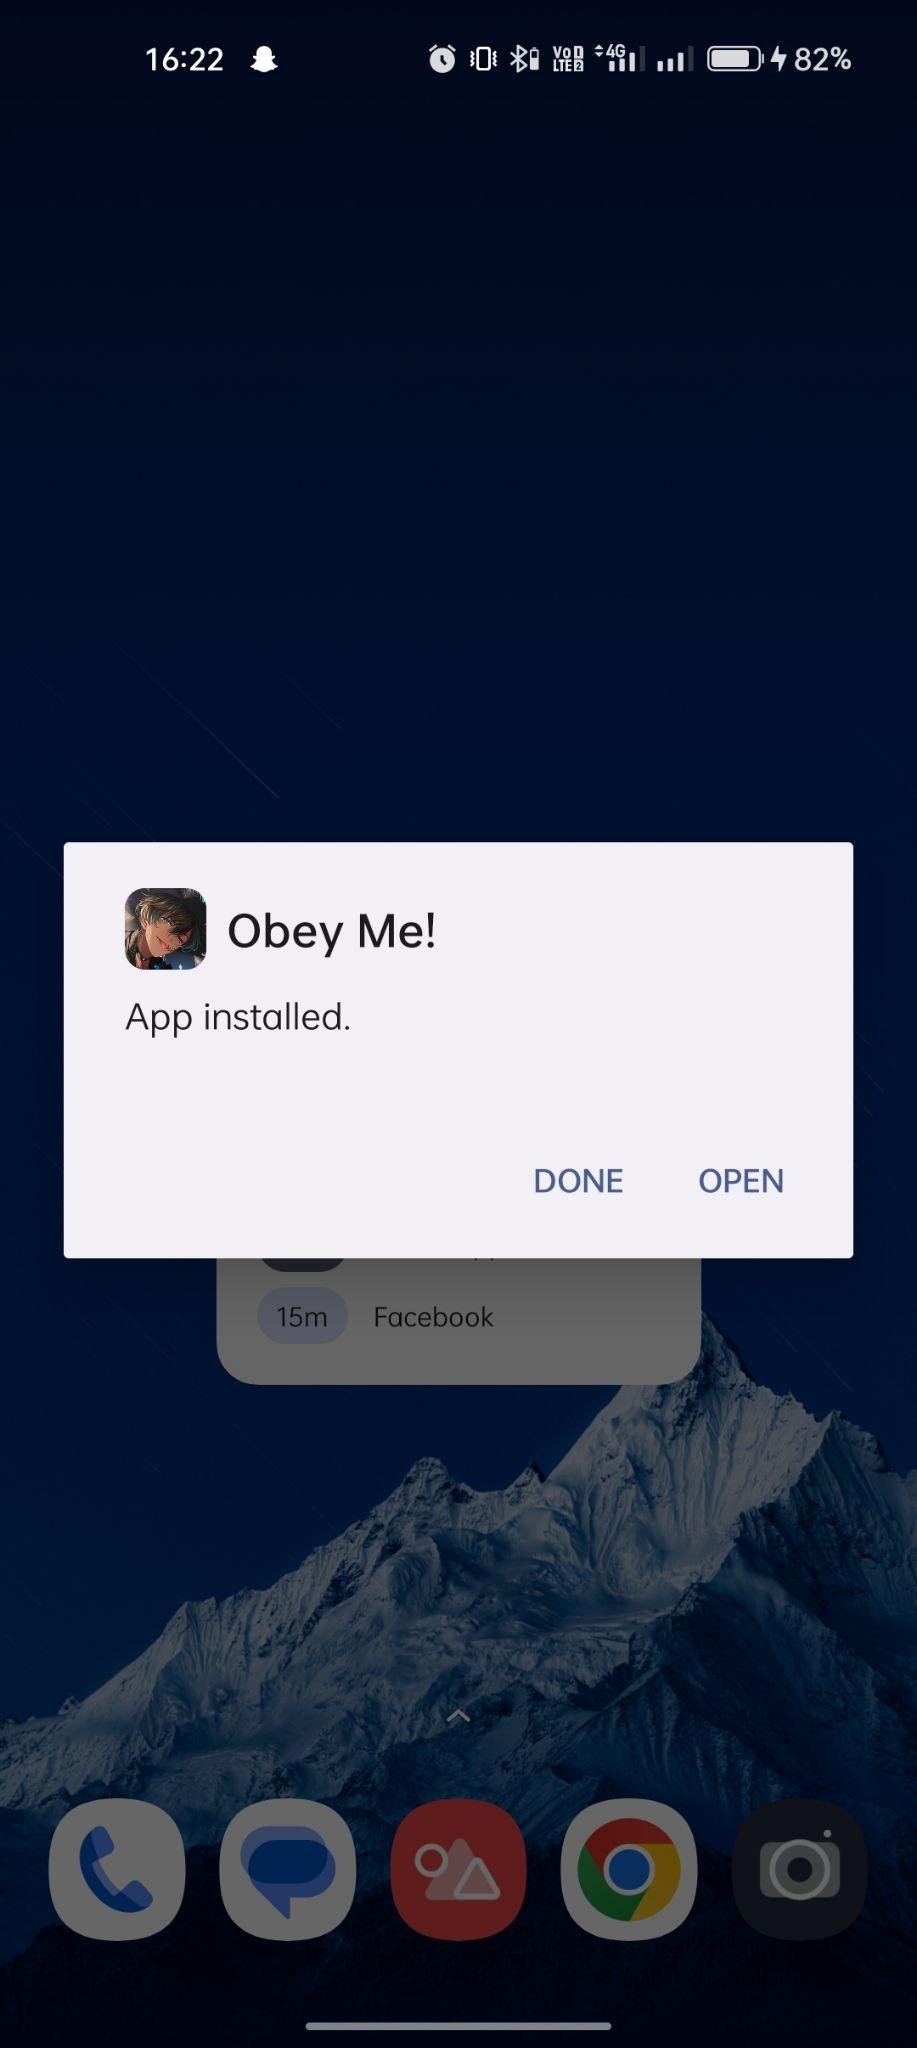 Obey Me! apk installed